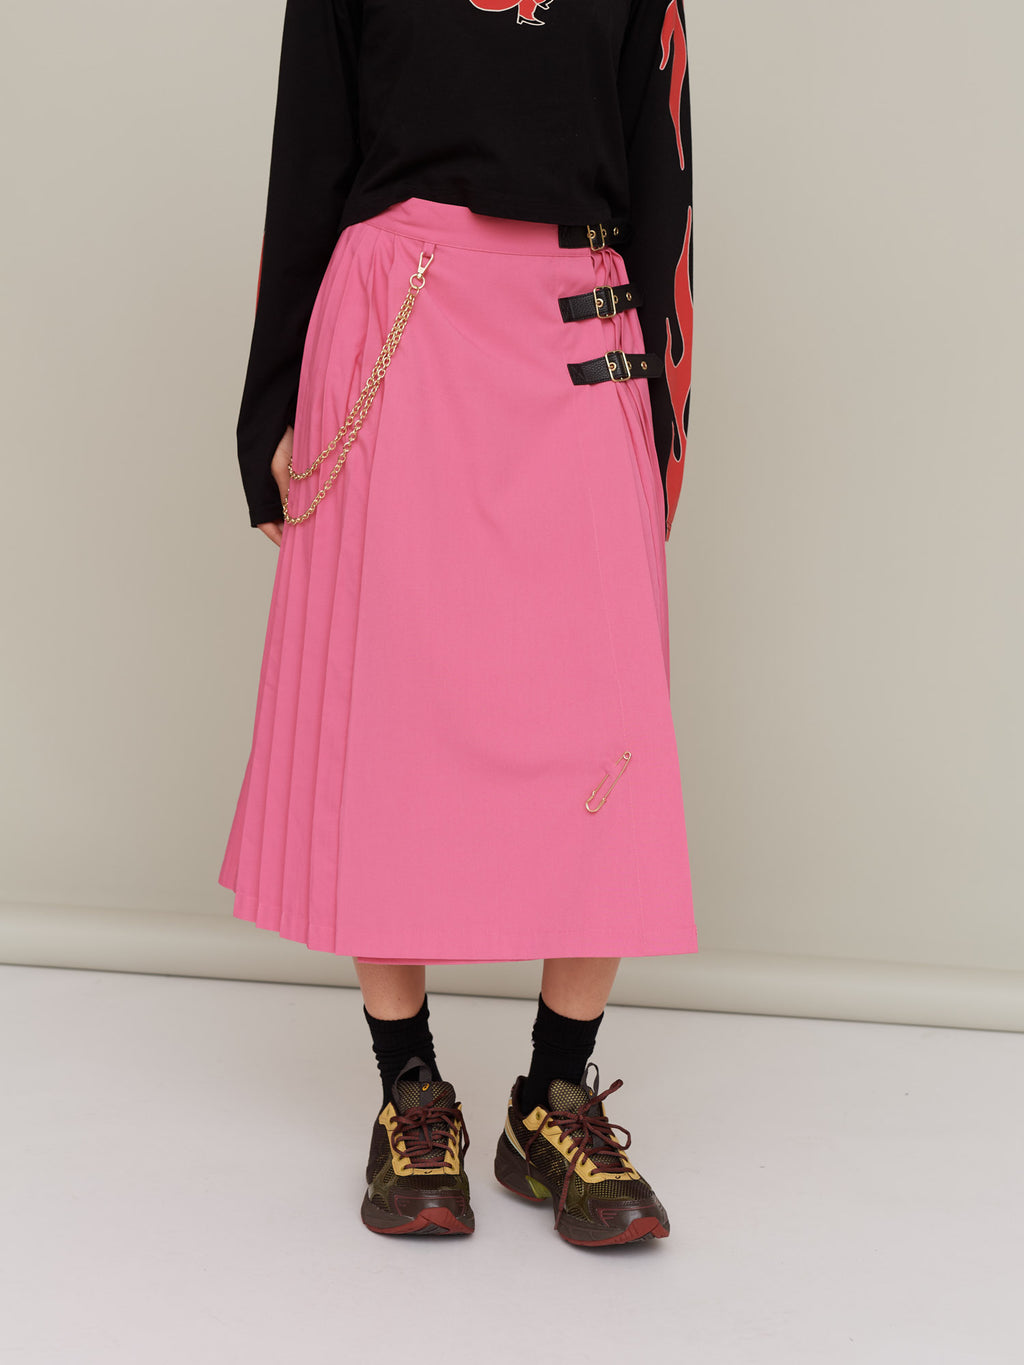 G.E.M Punk & Pink Kilt Skirt